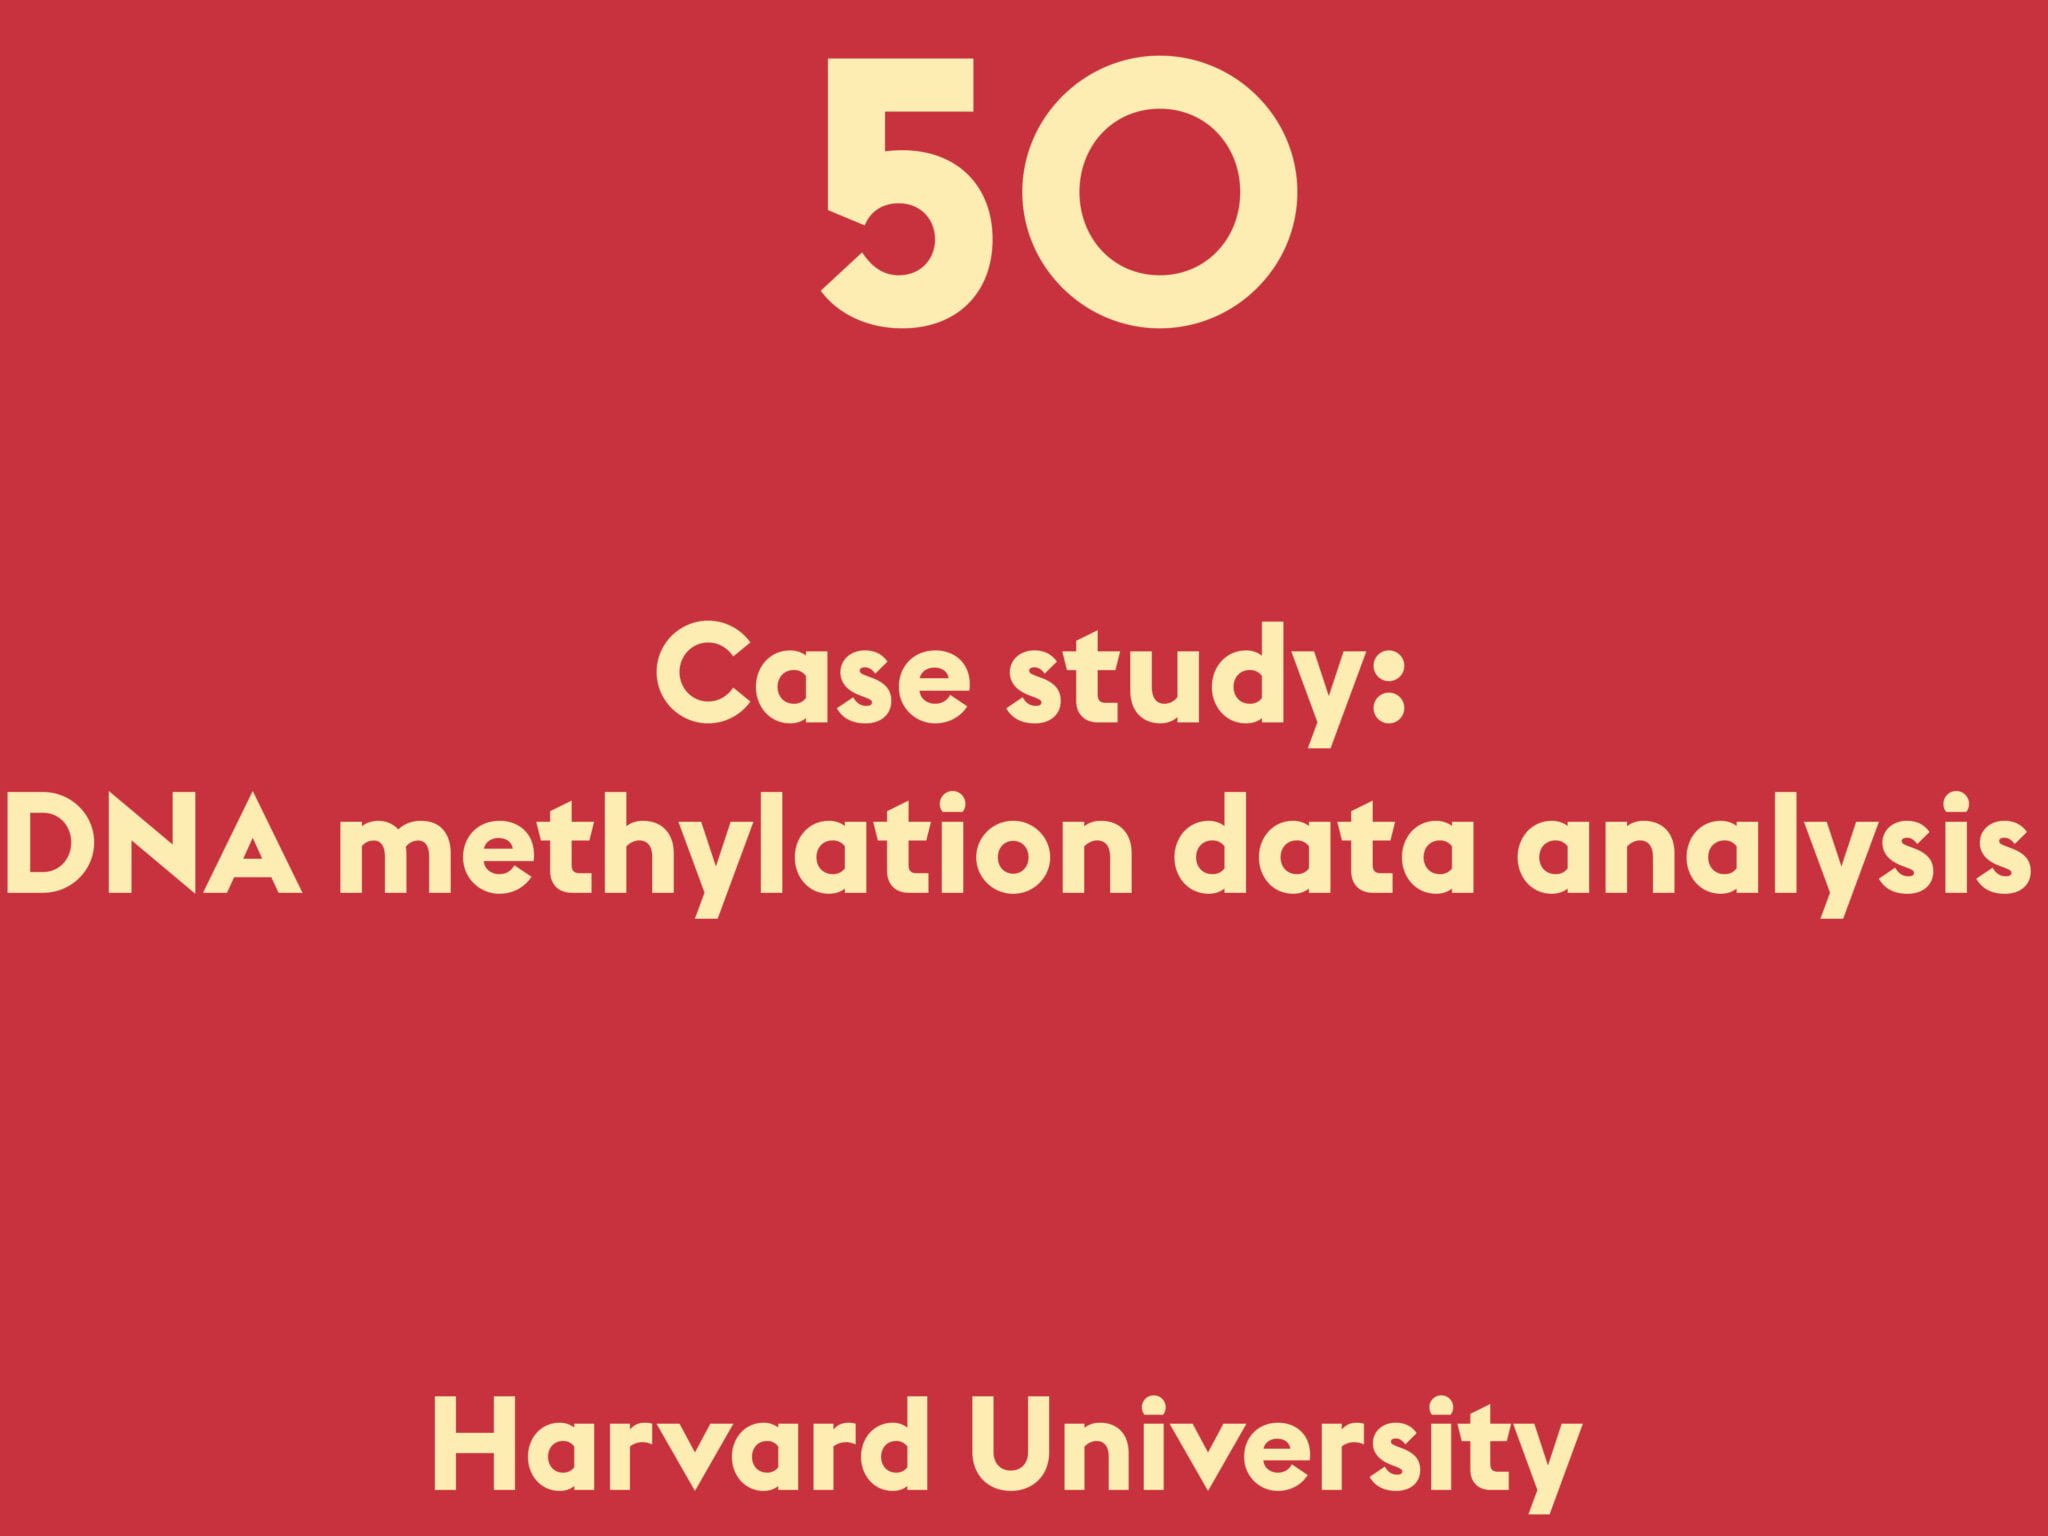 Case study: DNA methylation data analysis